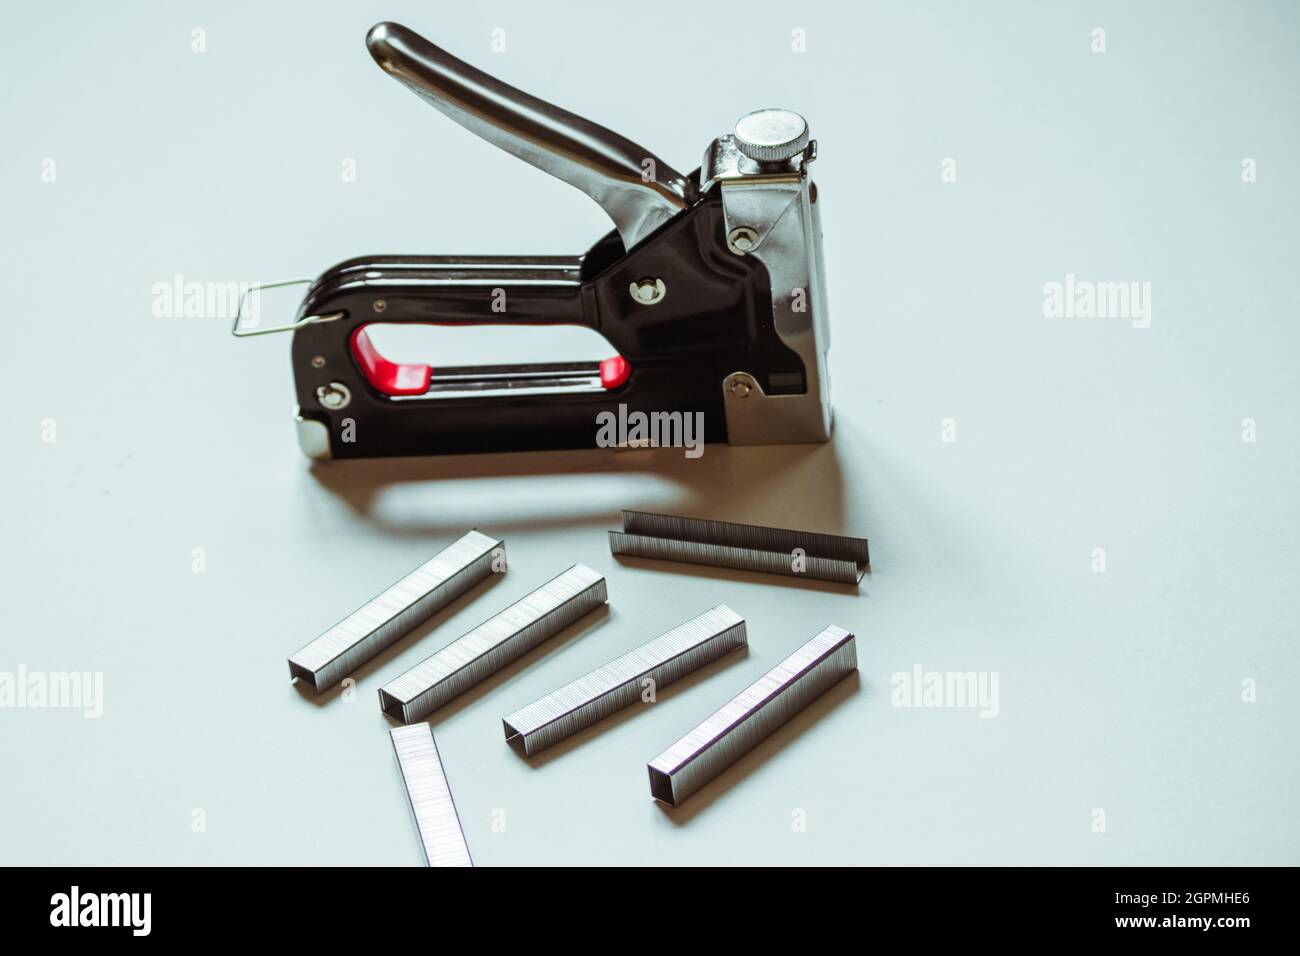 Furniture construction stapler next to staples on a white background.  Stock Photo